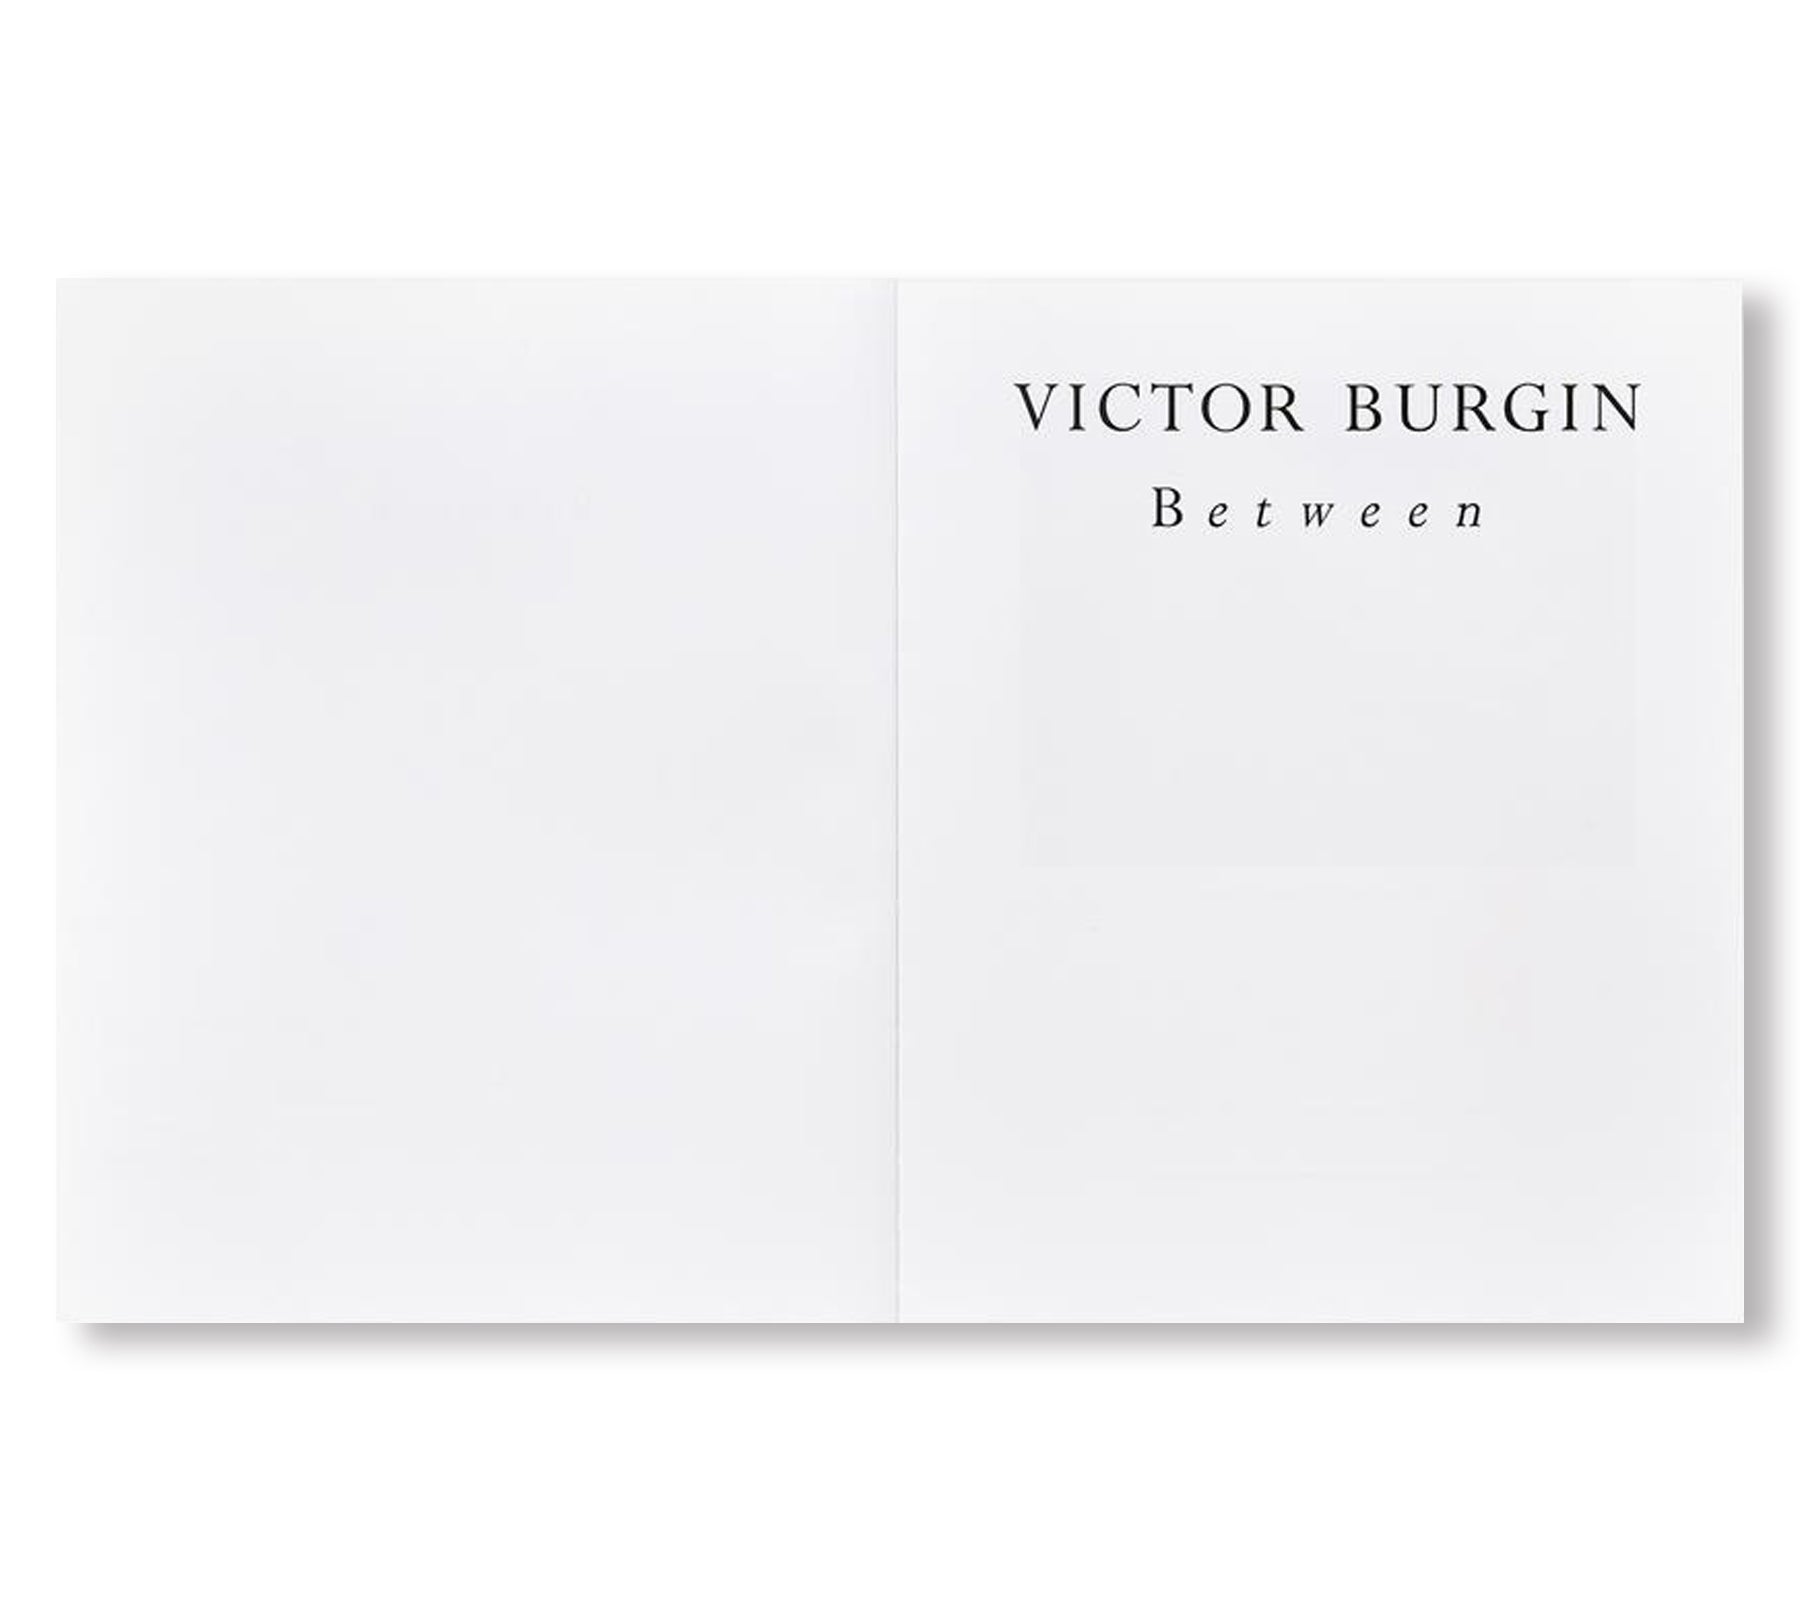 BETWEEN by Victor Burgin